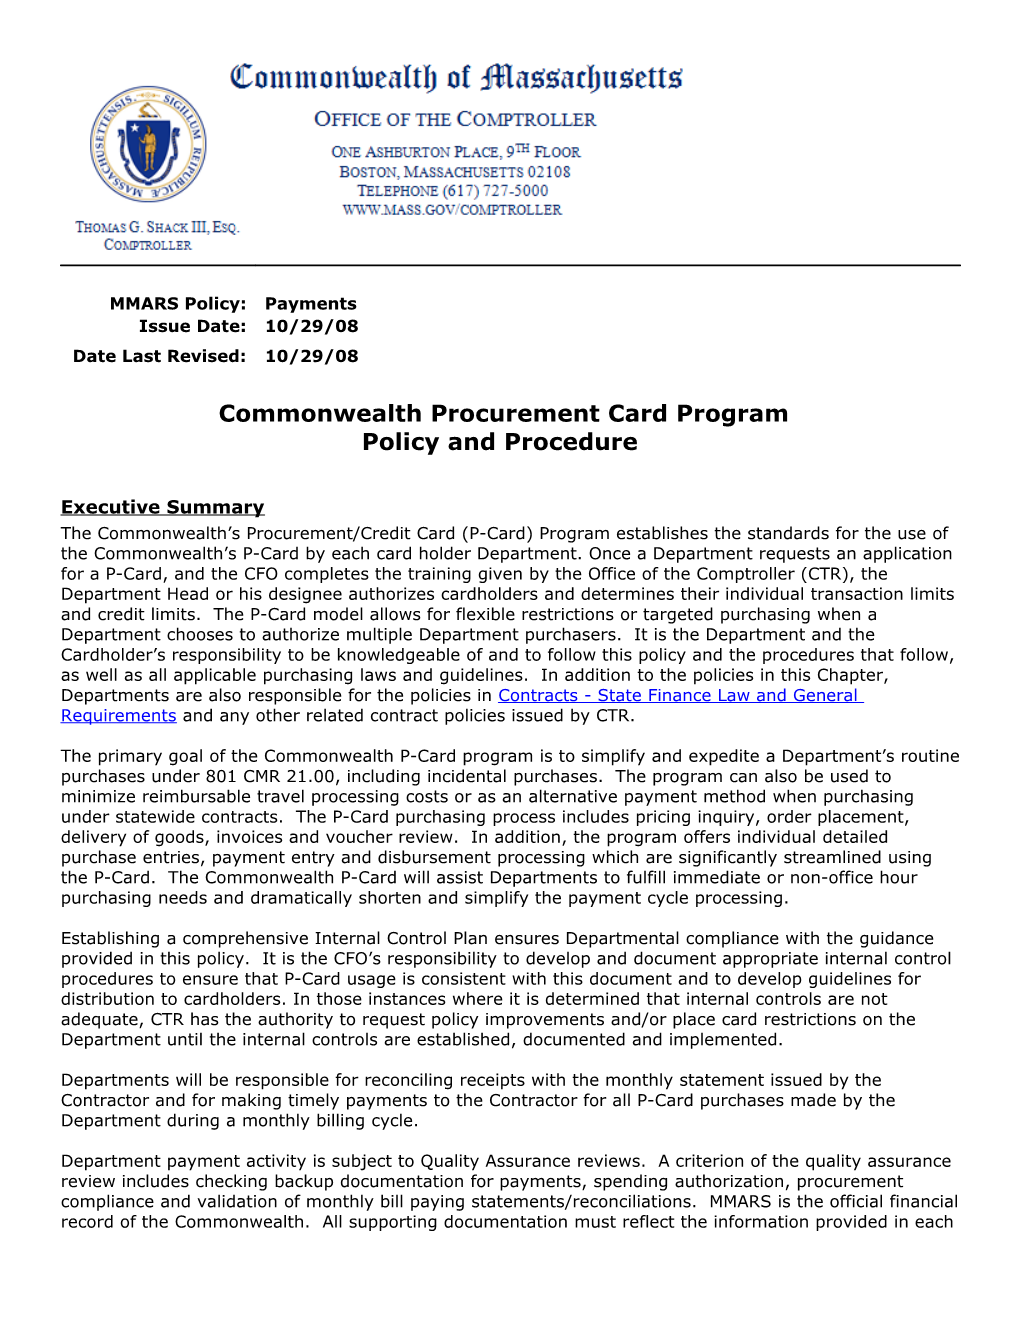 Commonwealth Procurement Card Program